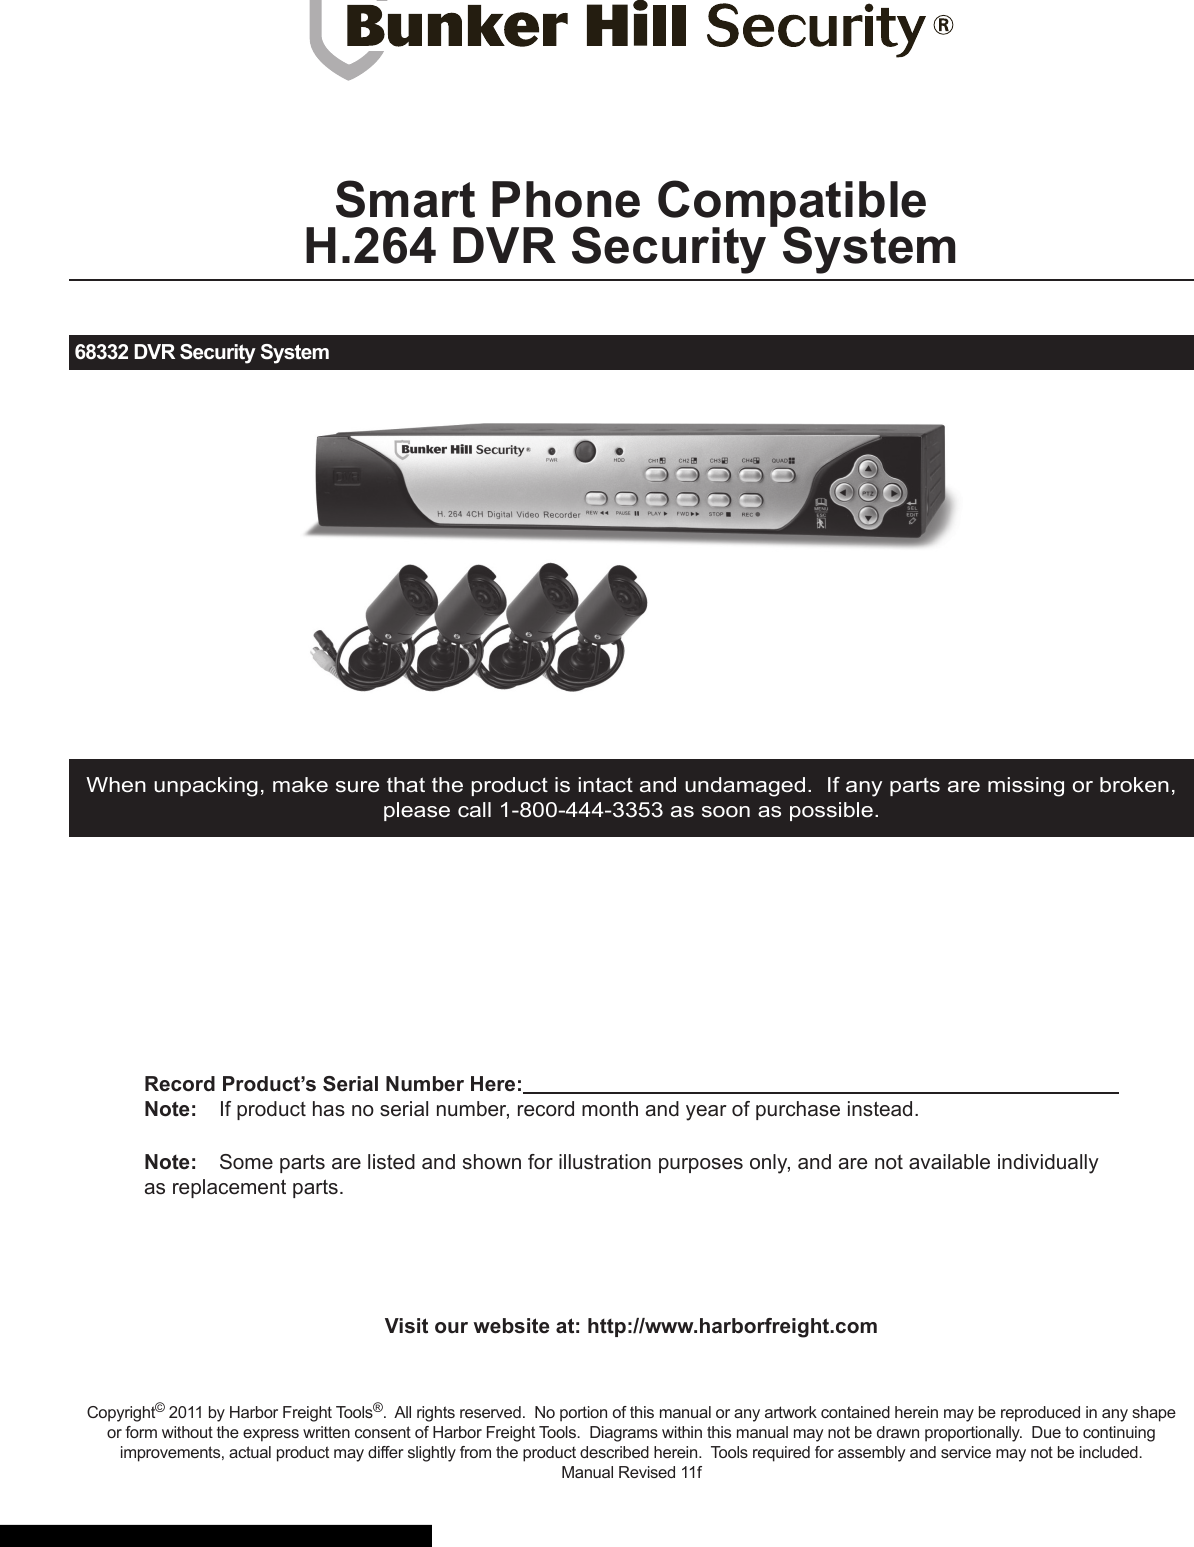 bunker hill security dvr manual